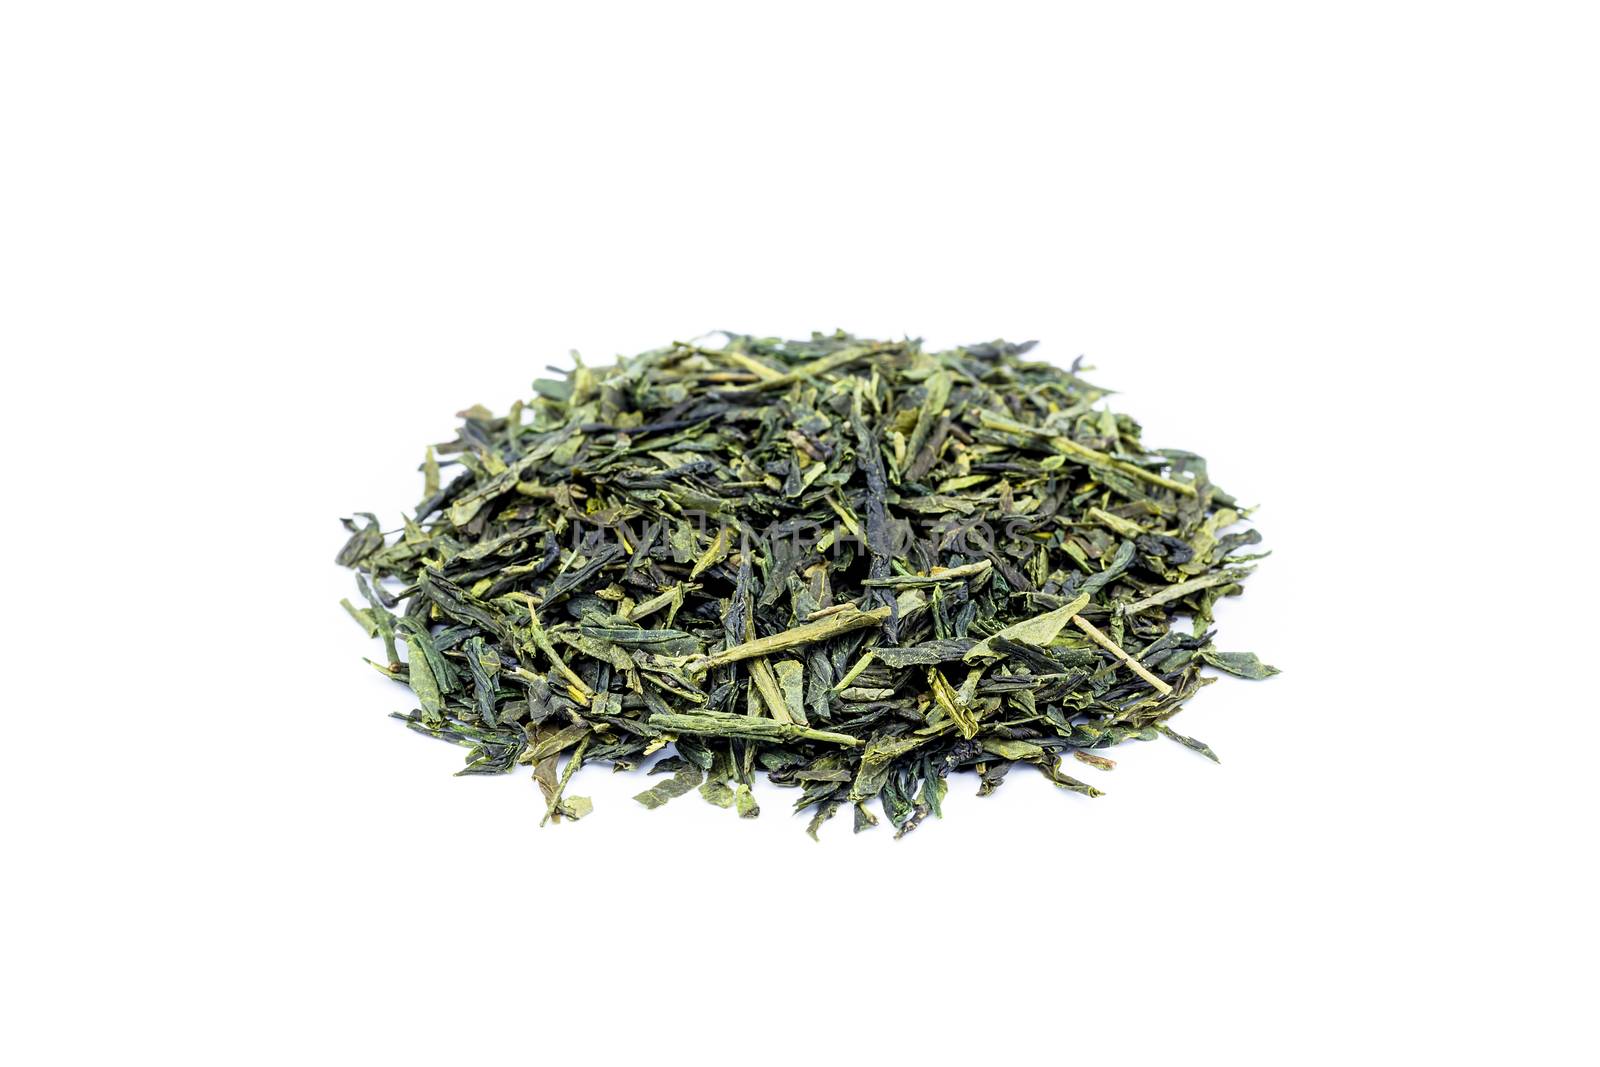 Heap of loose green tea Sencha isolated on white background